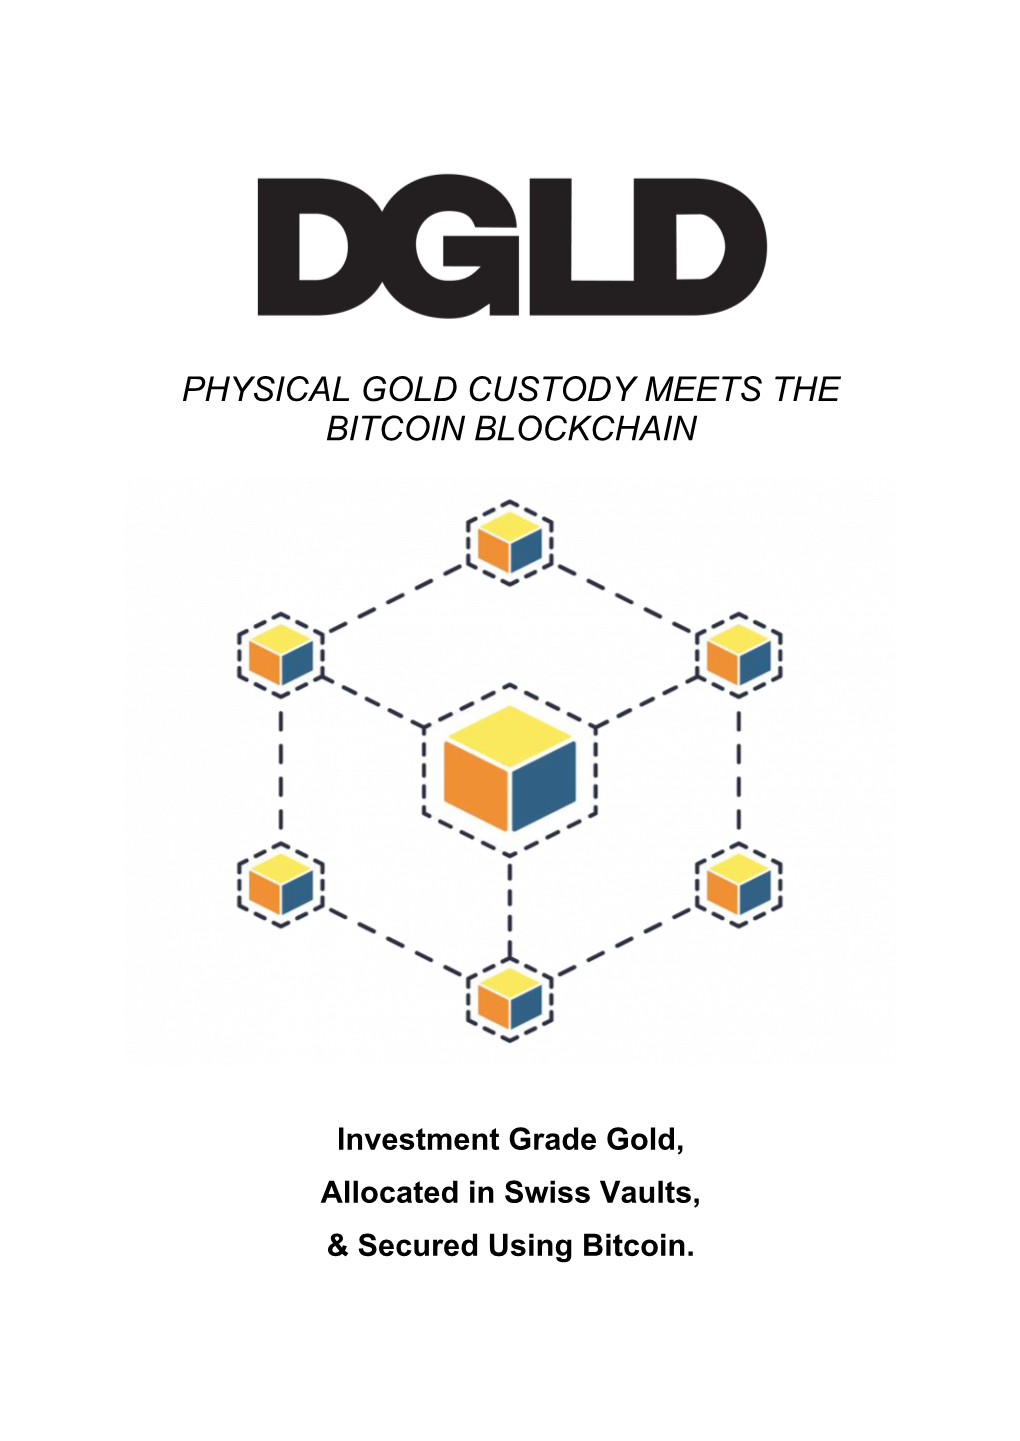 Physical Gold Custody Meets the Bitcoin Blockchain